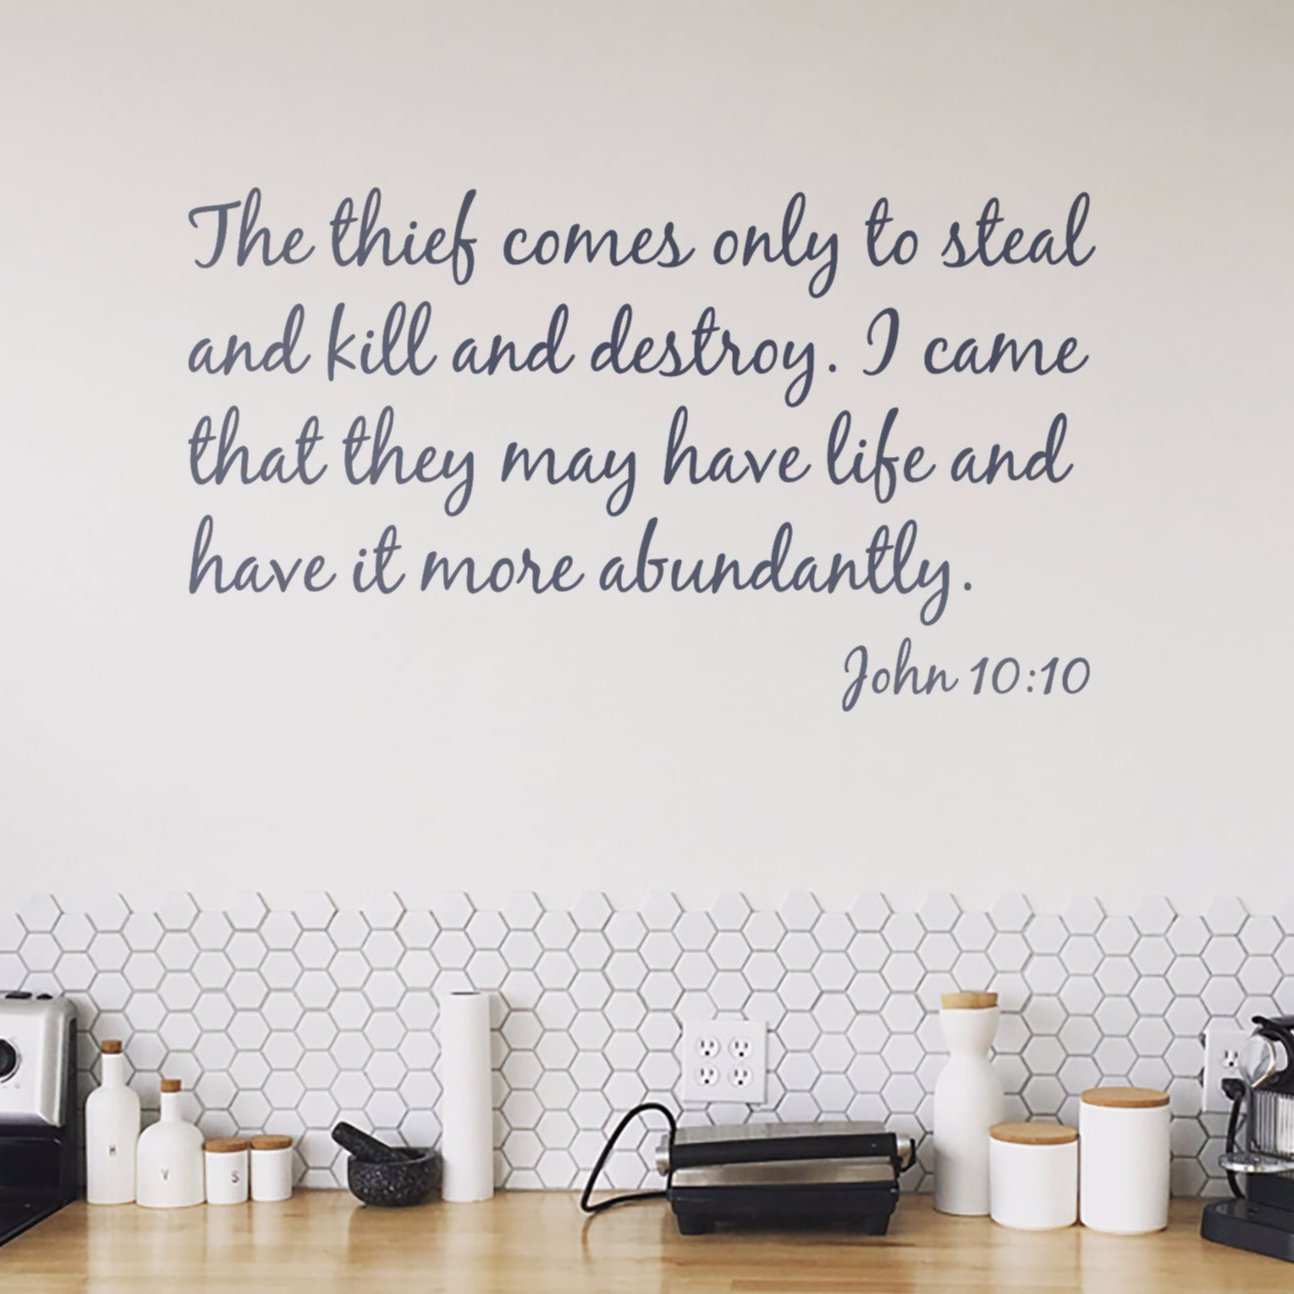 Give You Life Abundantly Wall Decal - John 10:10